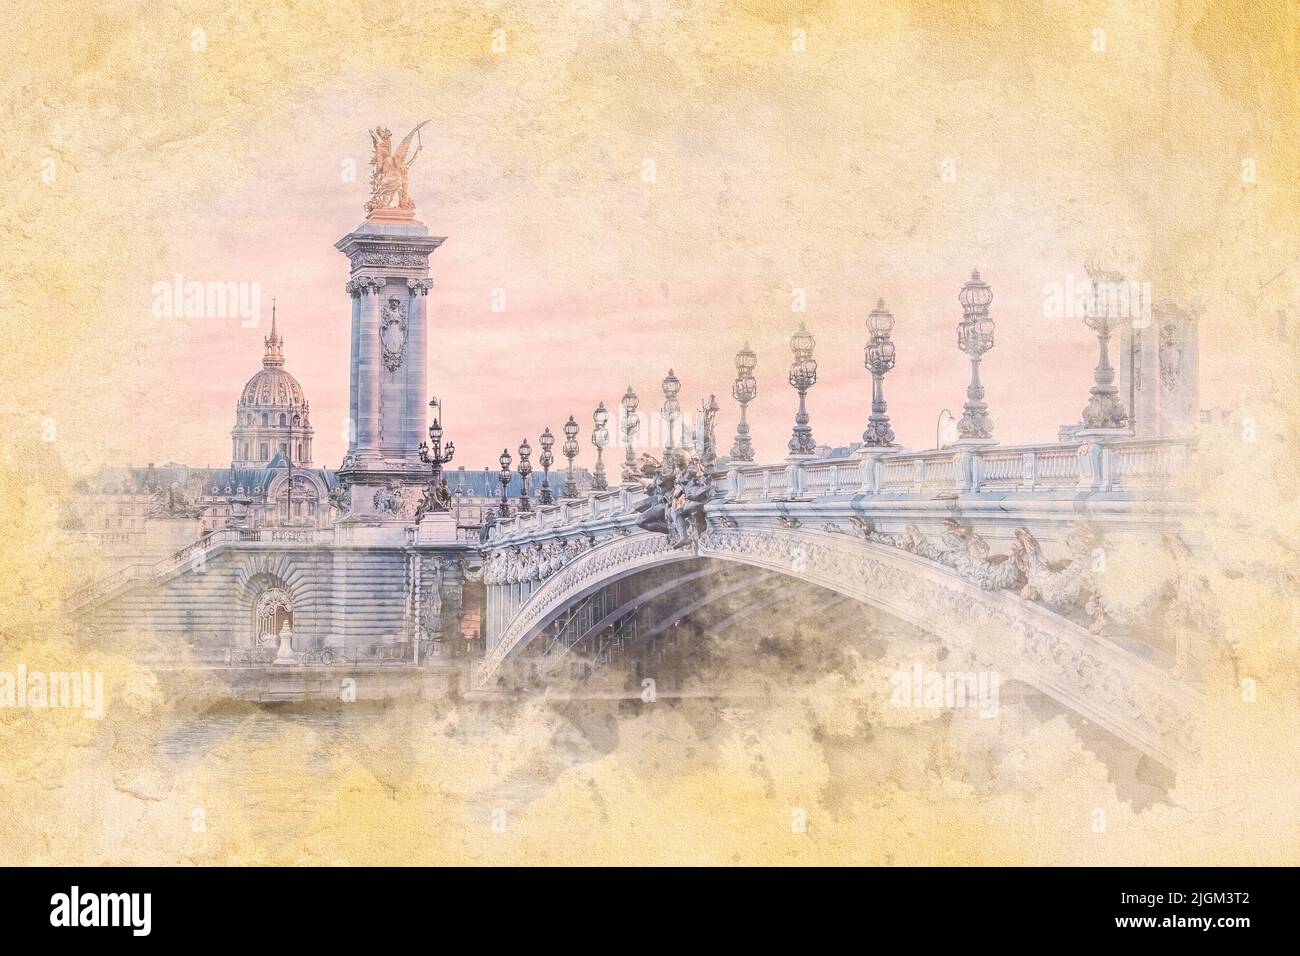 Alexandre III Bridge in Paris - Watercolor effect illustration Stock Photo